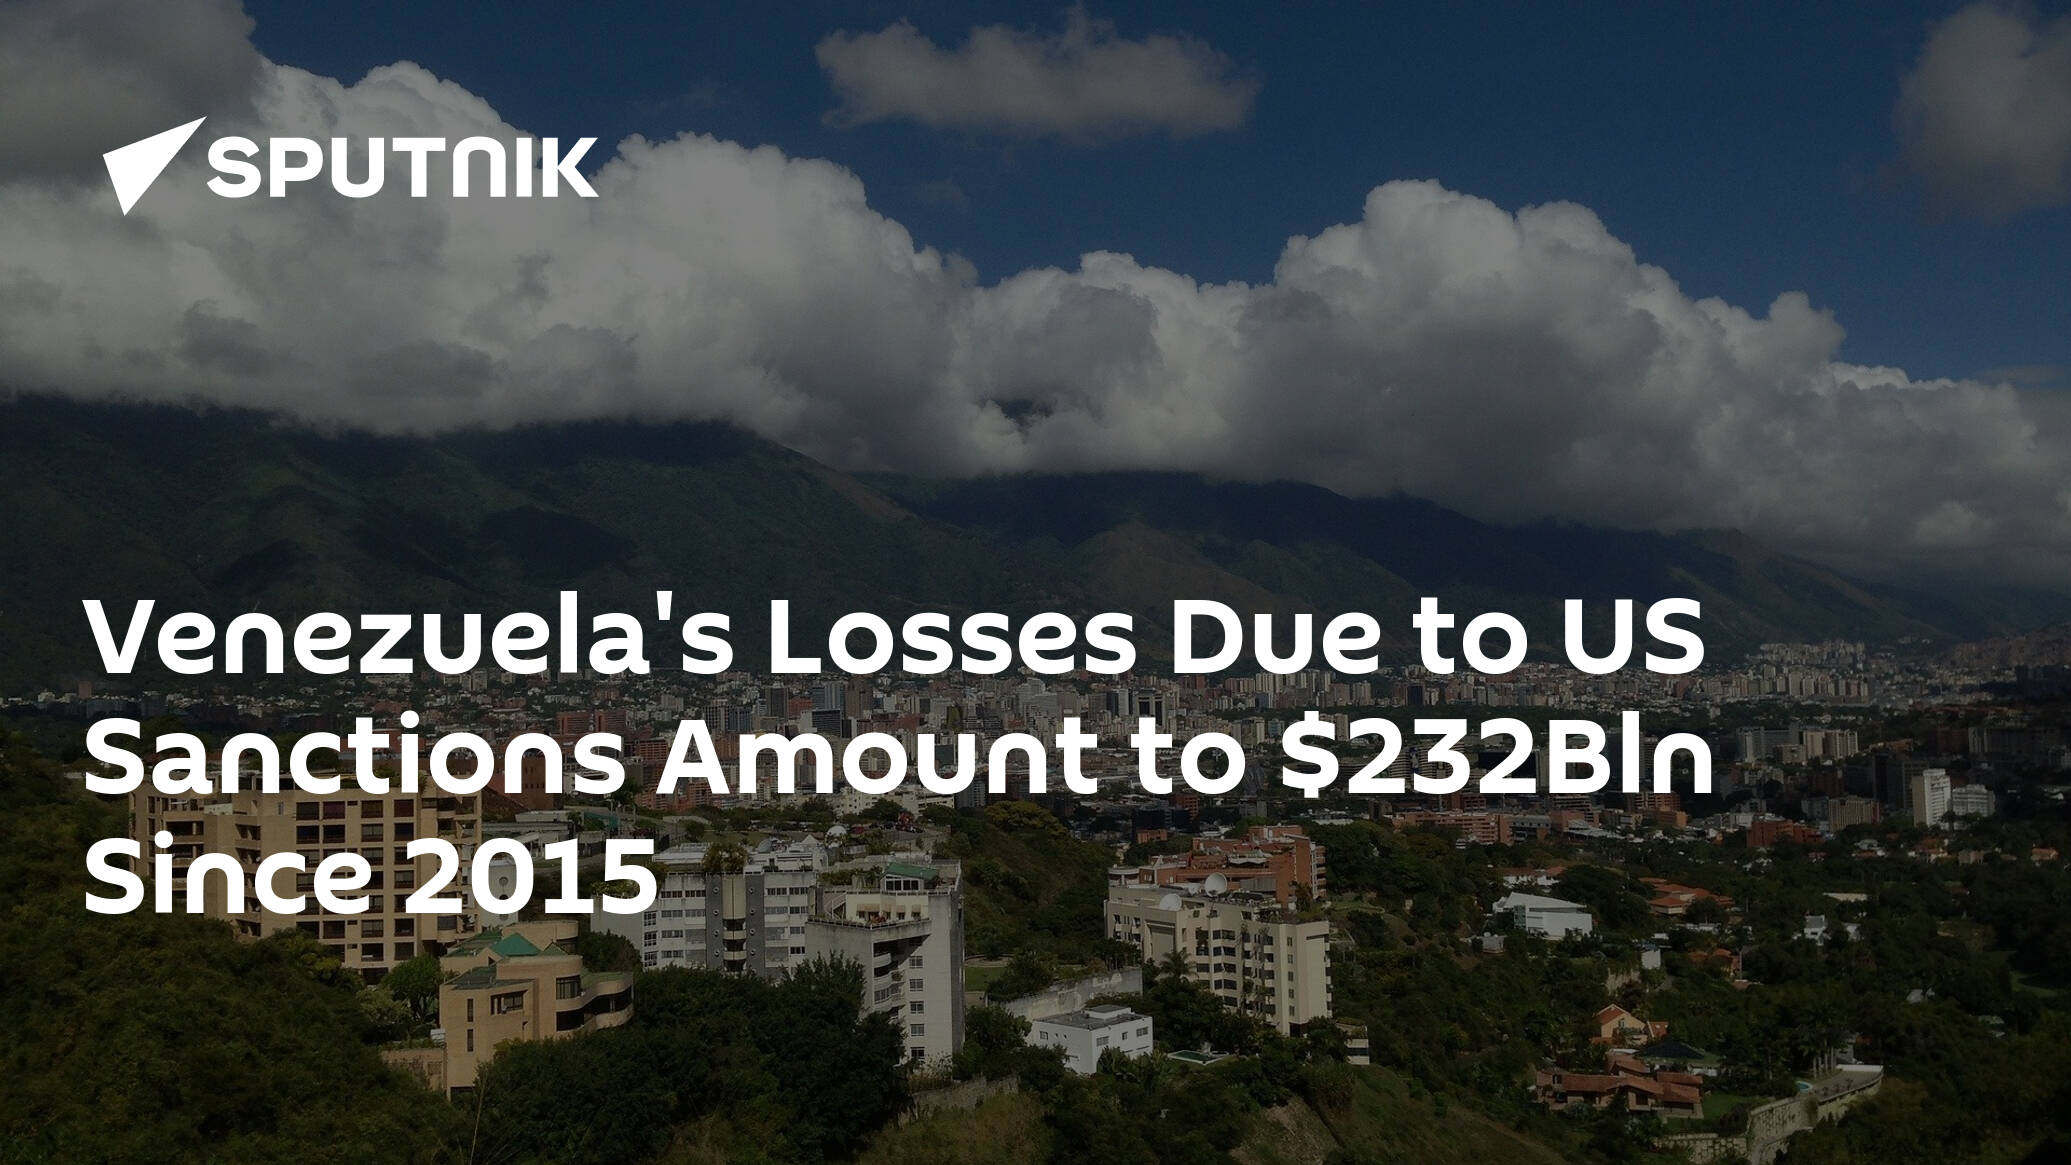 Venezuela's Losses Due to US Sanctions Amount to 2Bln Since 2015